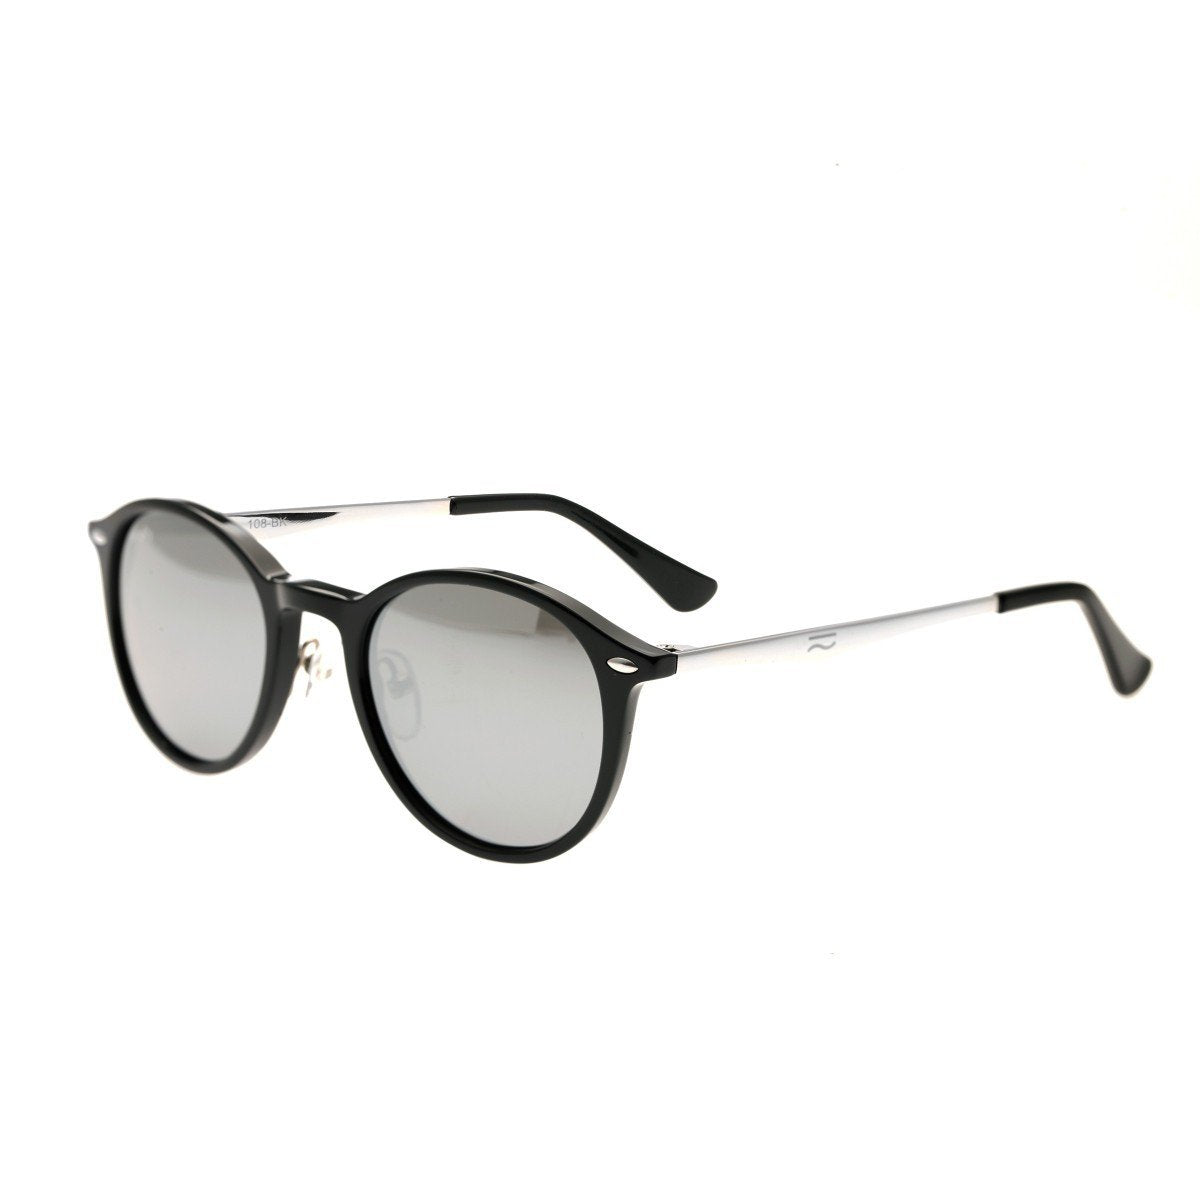 Simplify Reynolds Polarized Sunglasses